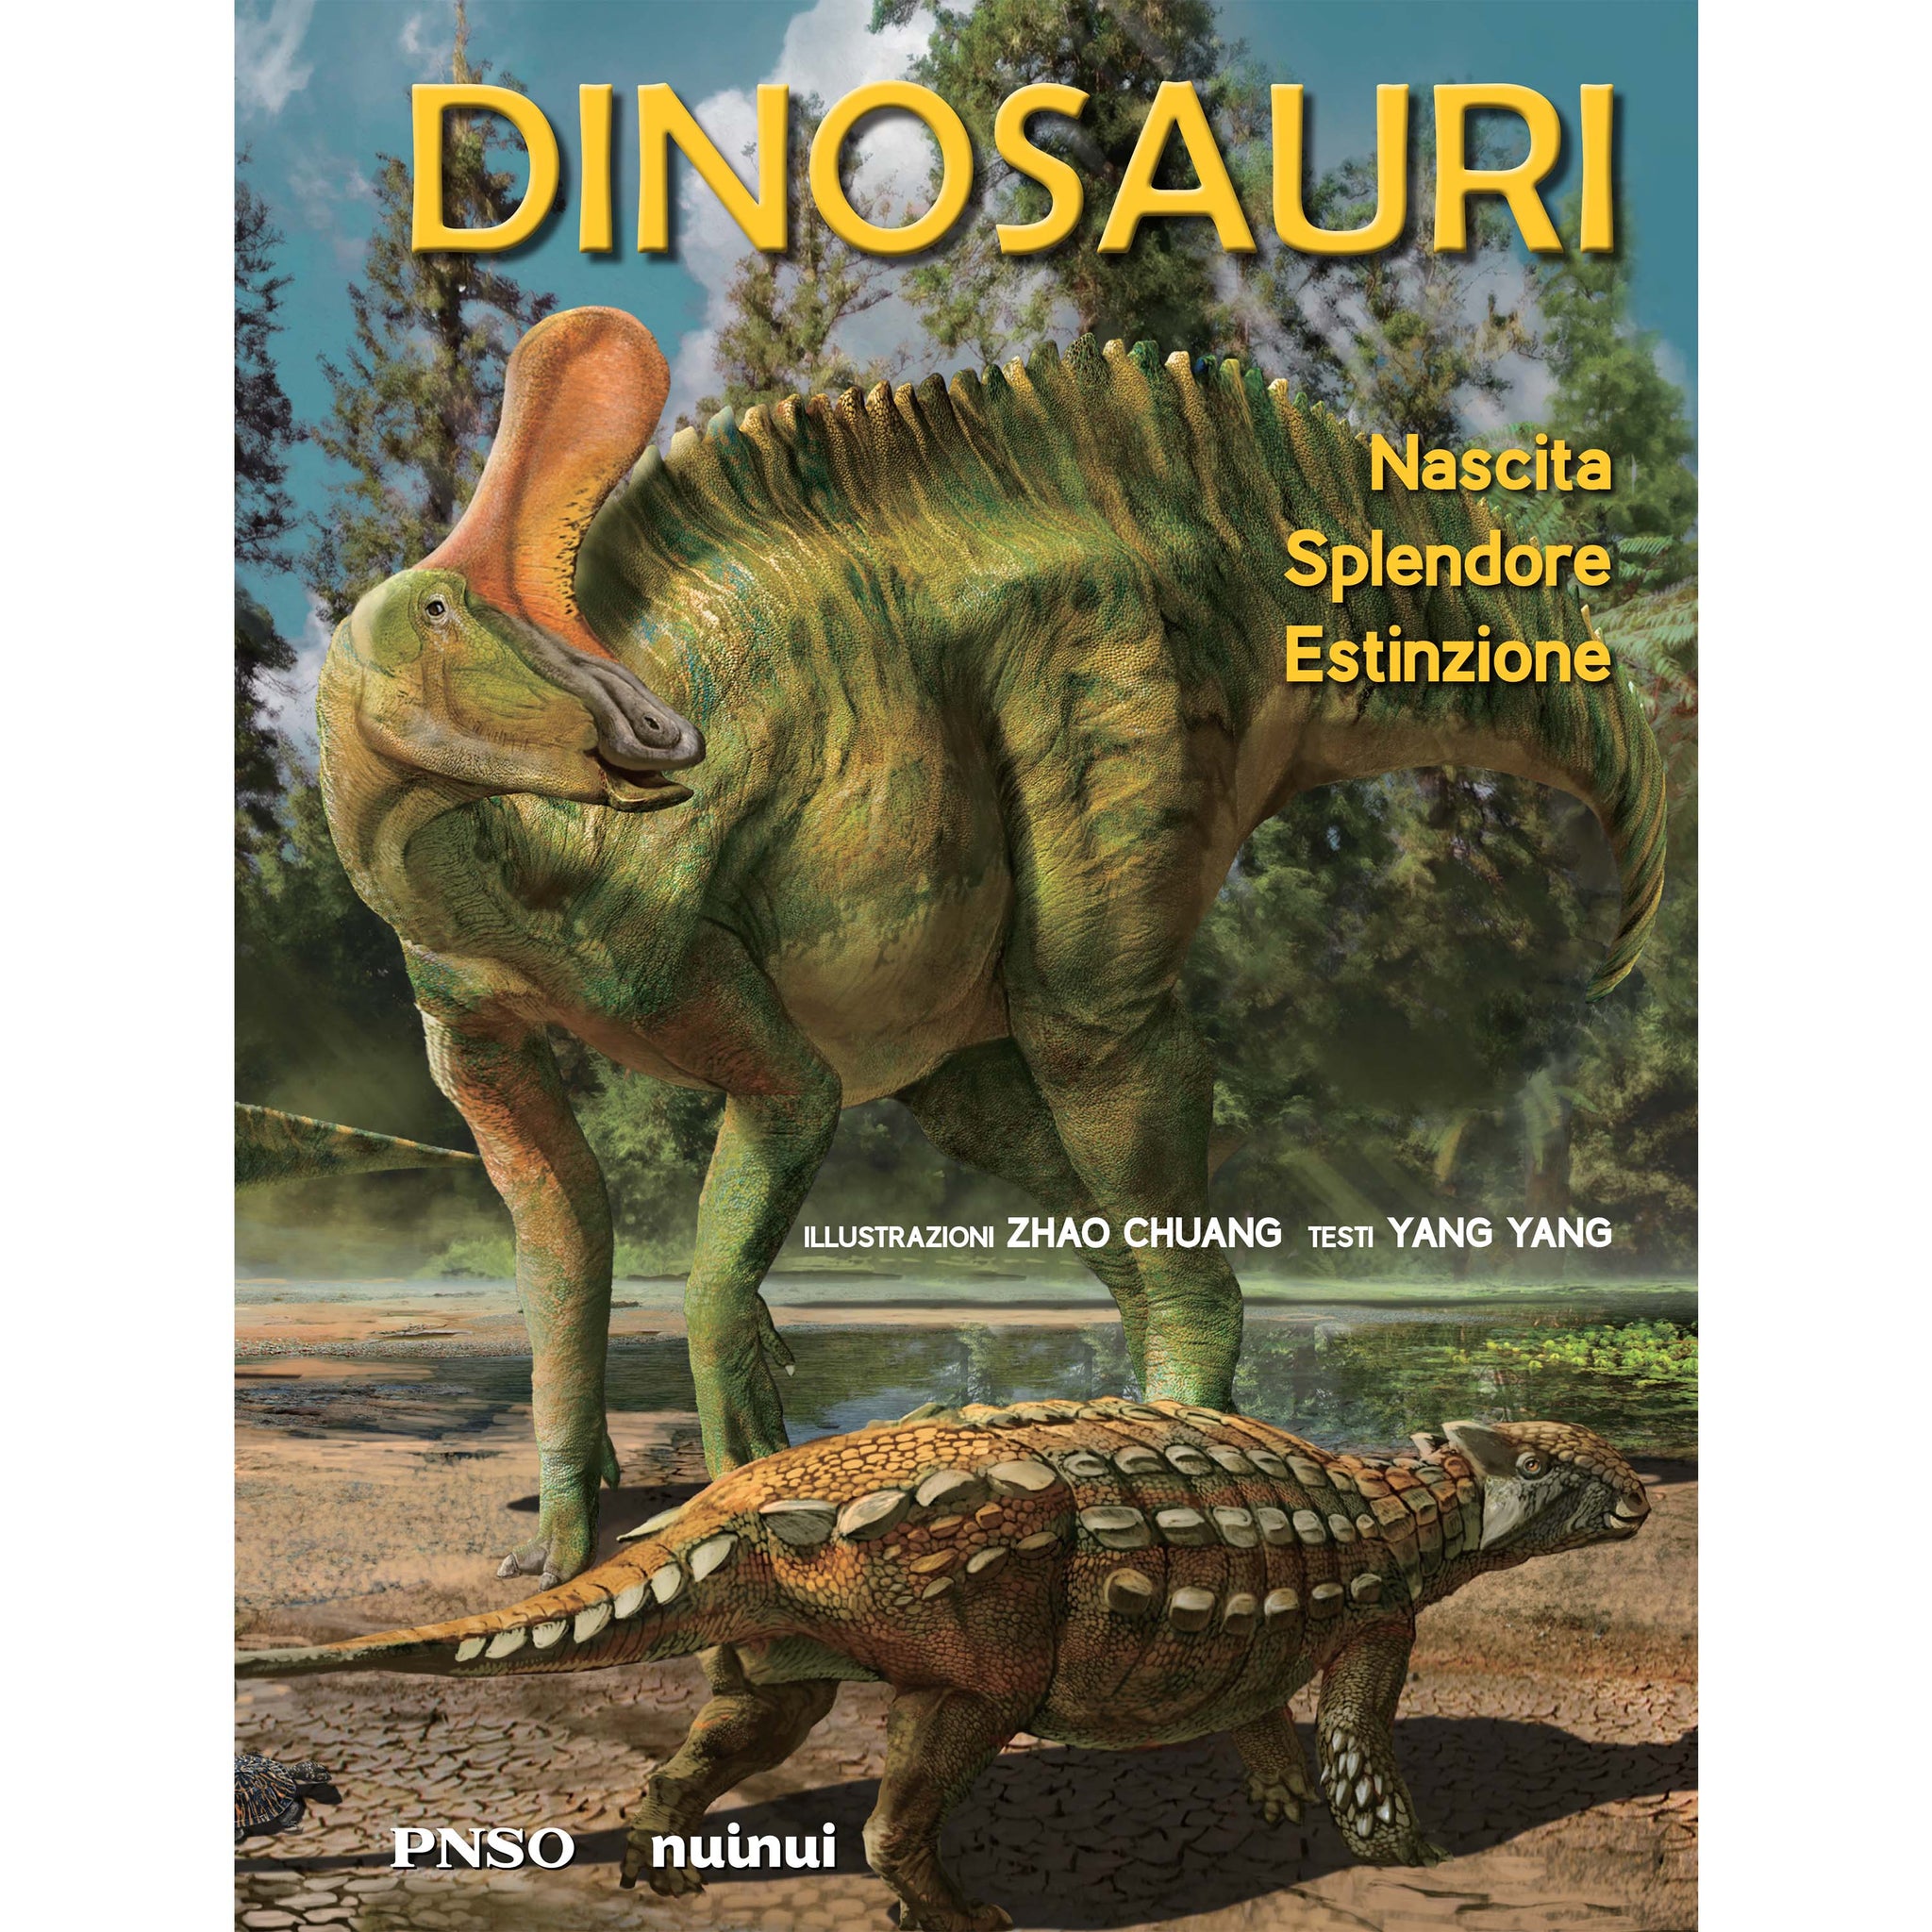 Dinosaurs - Birth, splendor, extinction